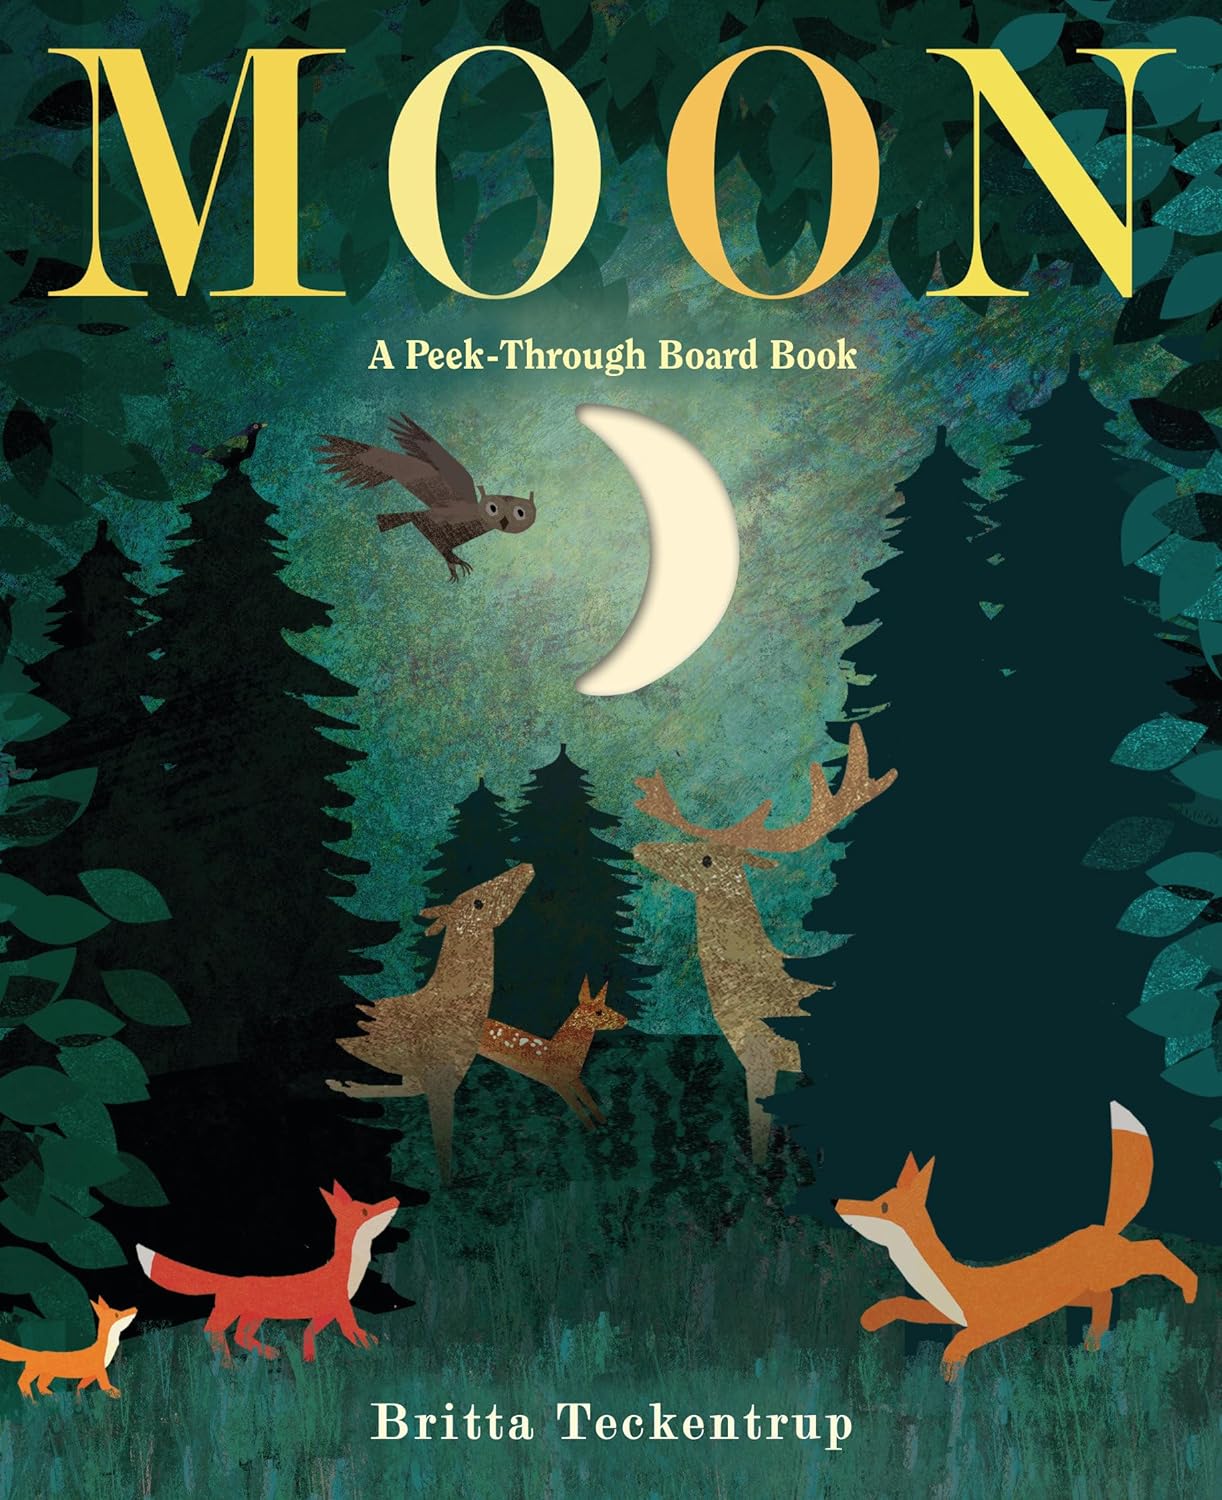 Book - Moon: A Peep Through Picture Book, by Britta Teckentrup